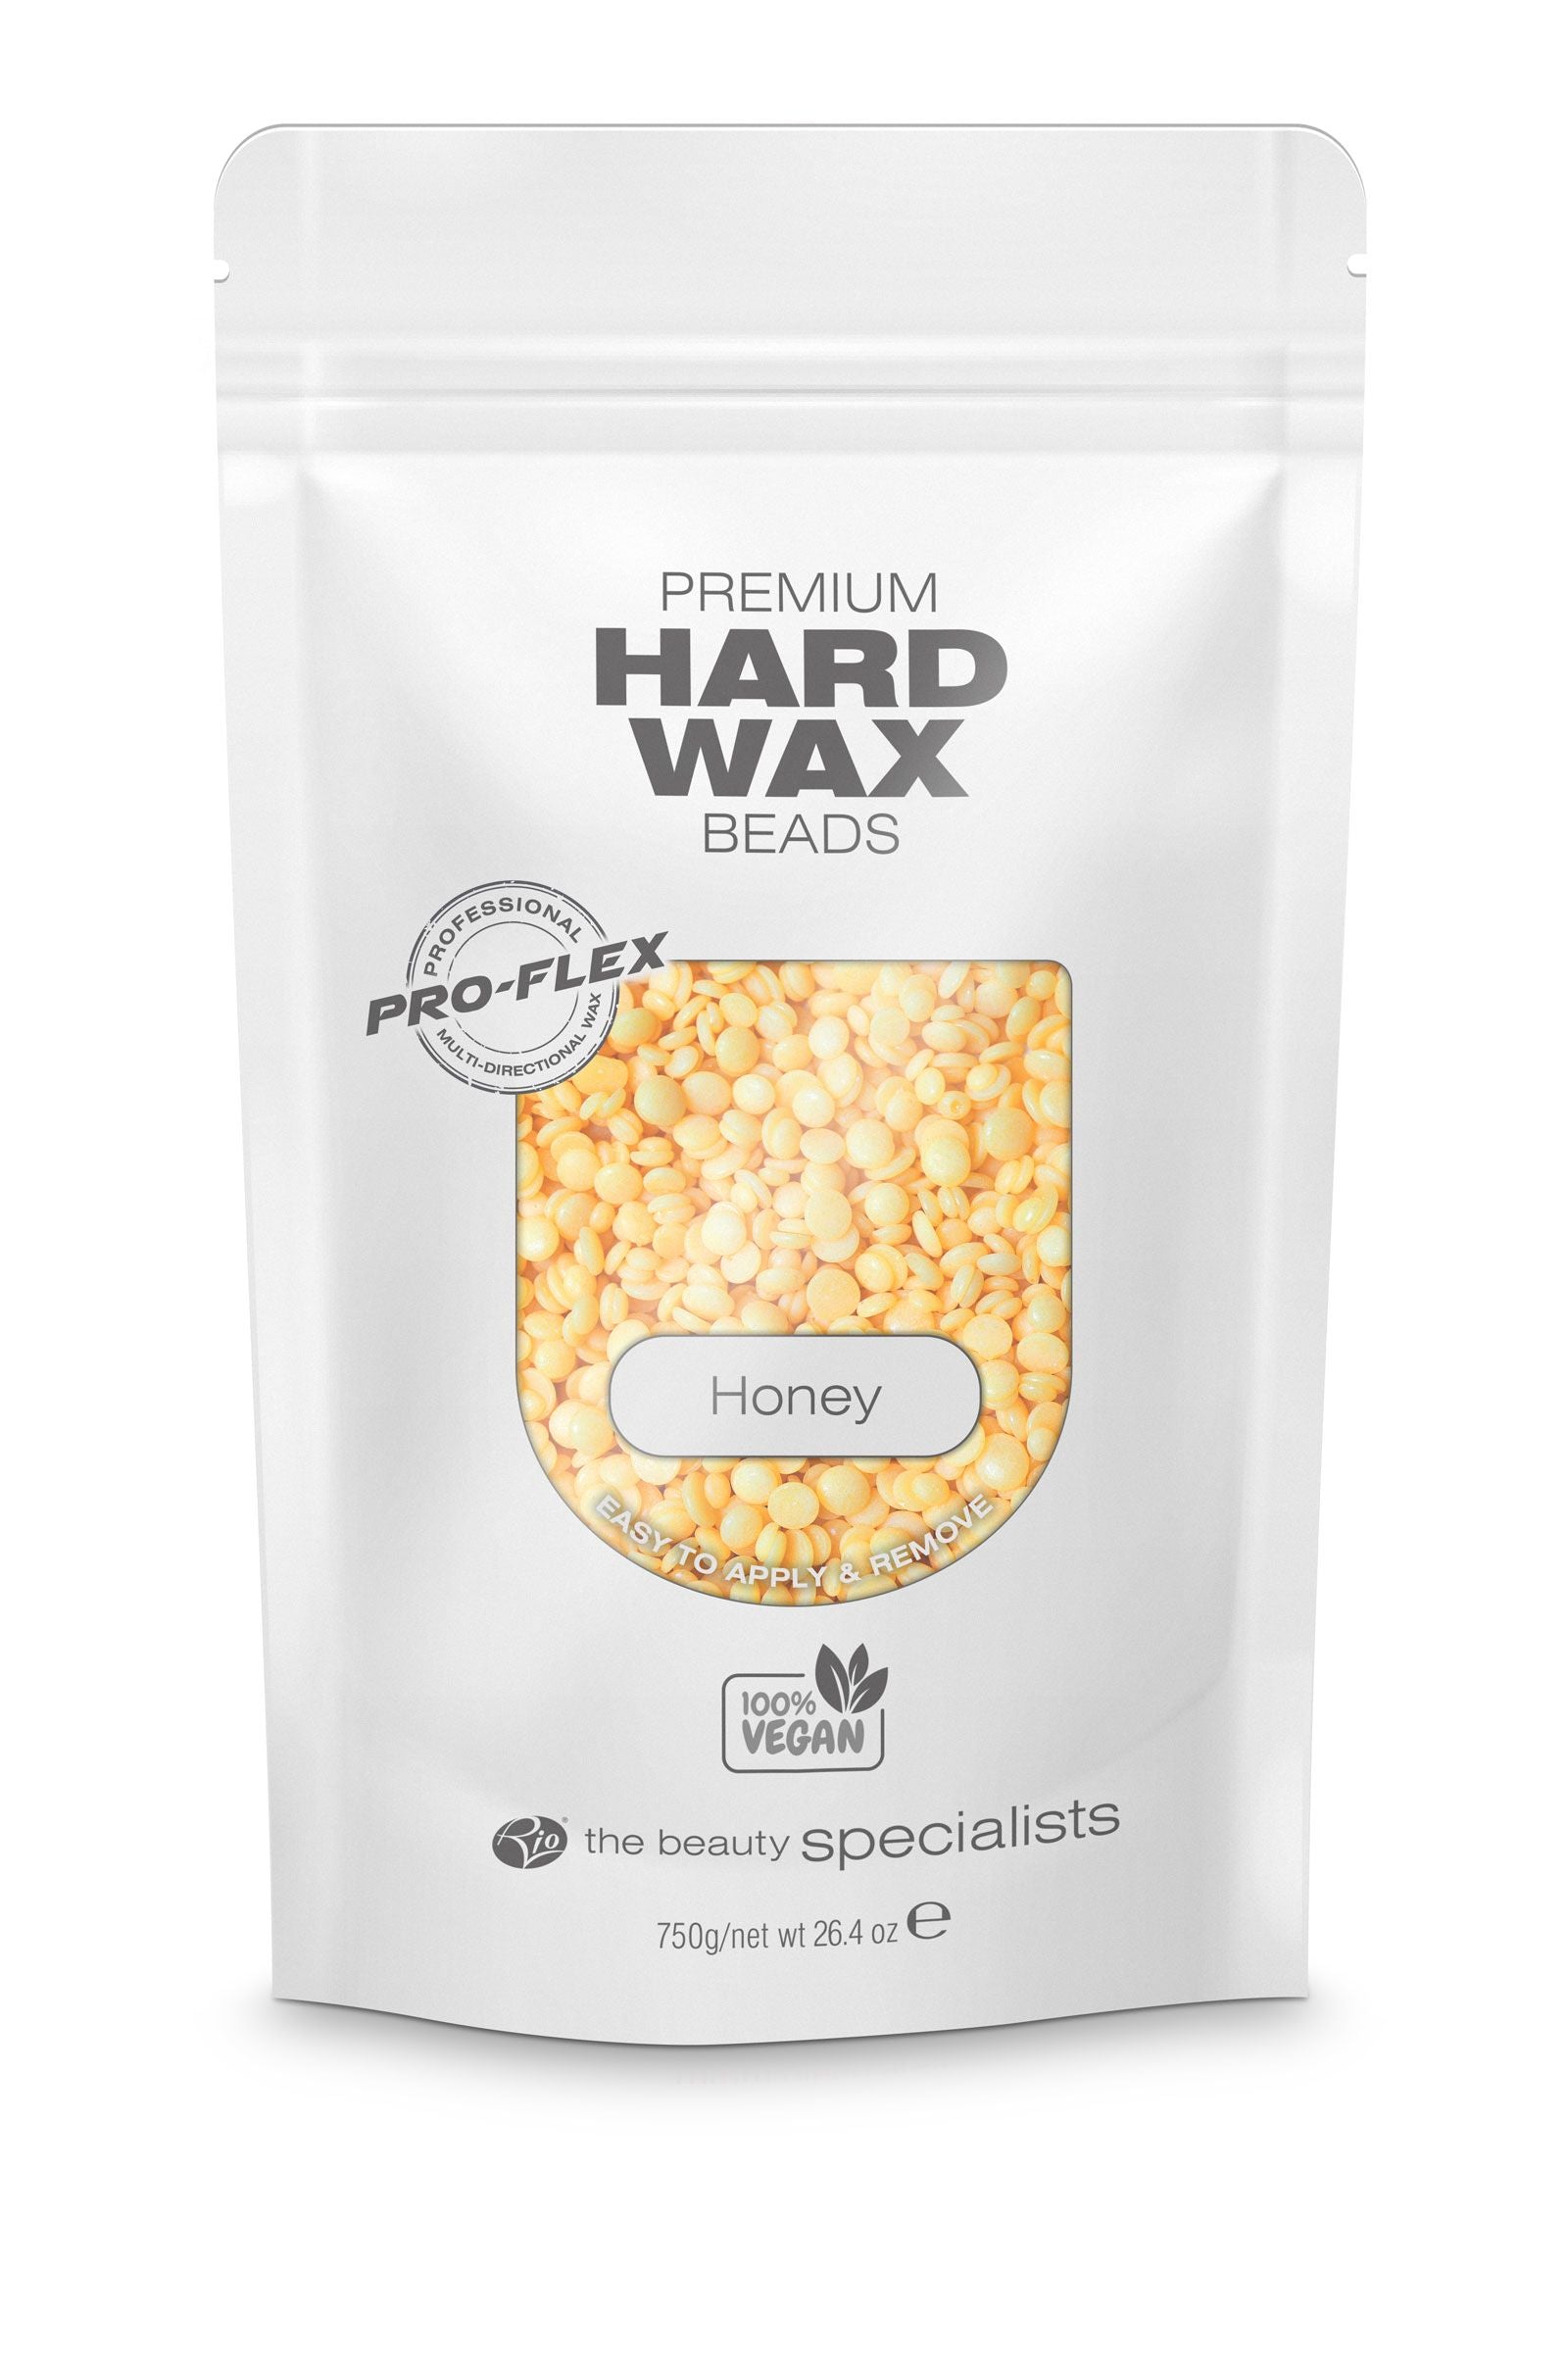 Premium Hard Wax Honey Beads for hair removal , 100% vegan, 750g